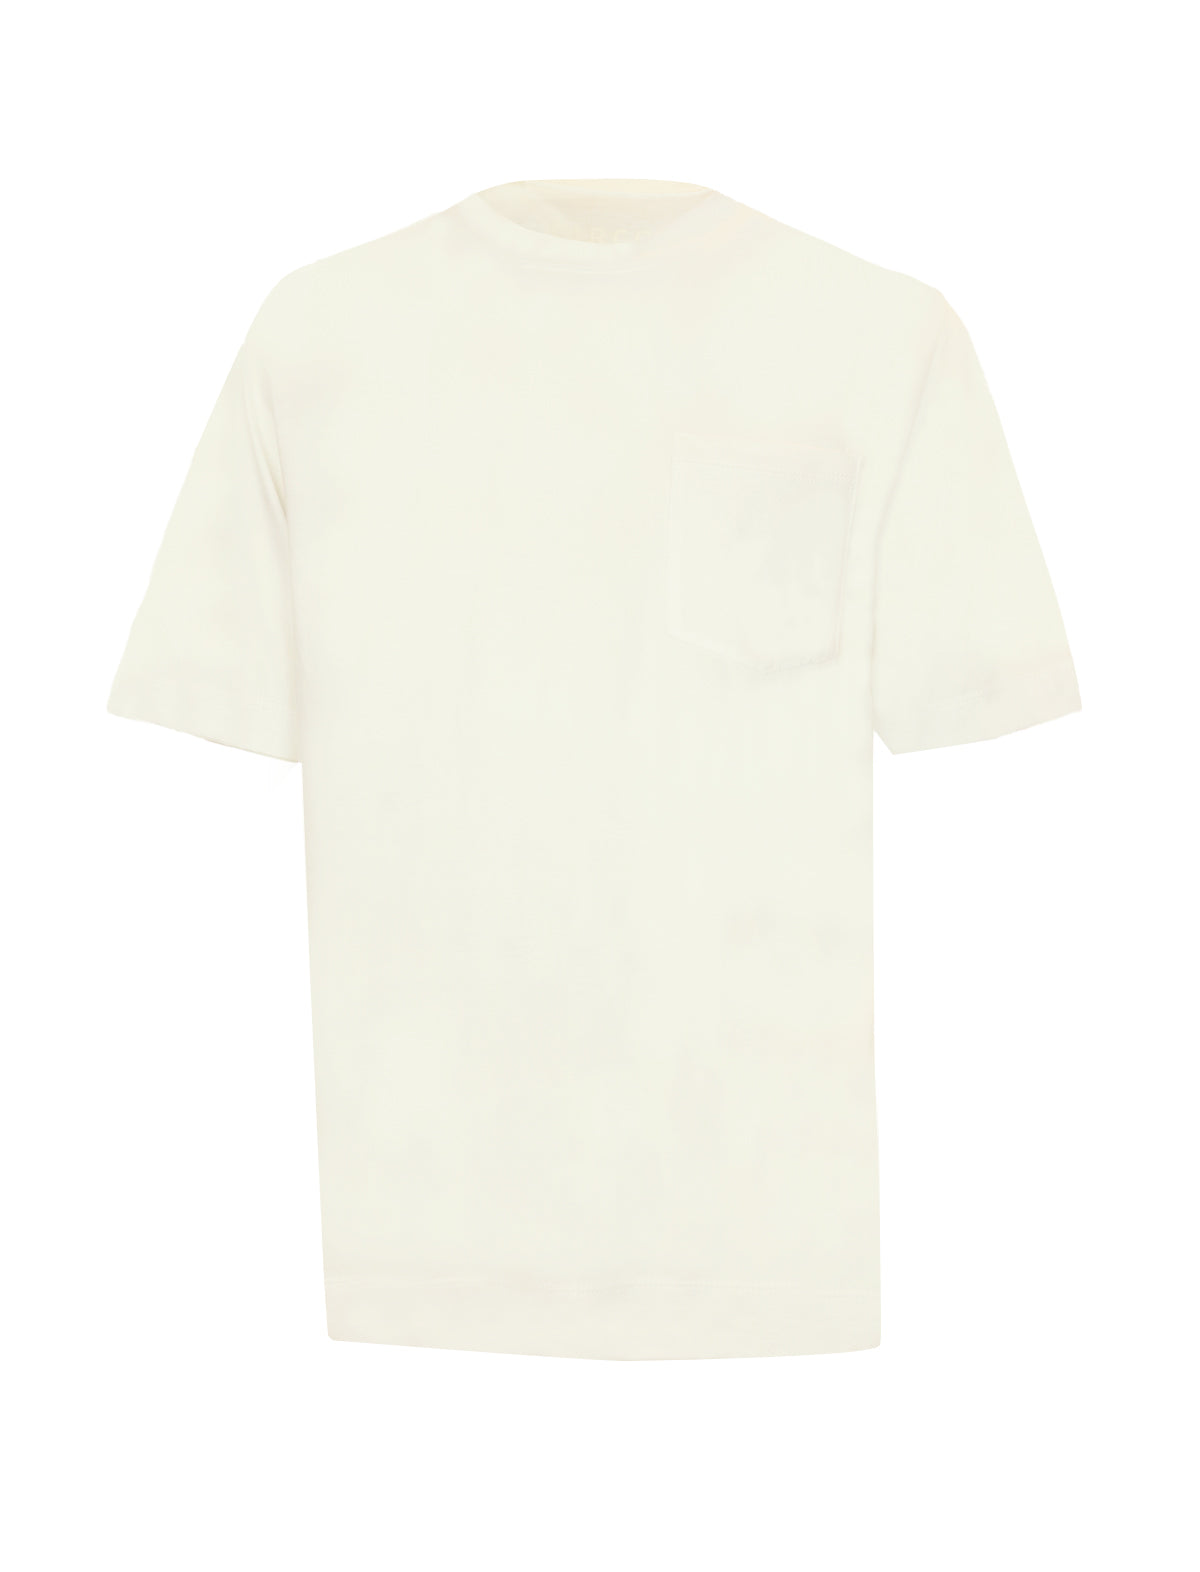 CIRCOLO 1901 Cotton-Blend T-Shirt in Bright White